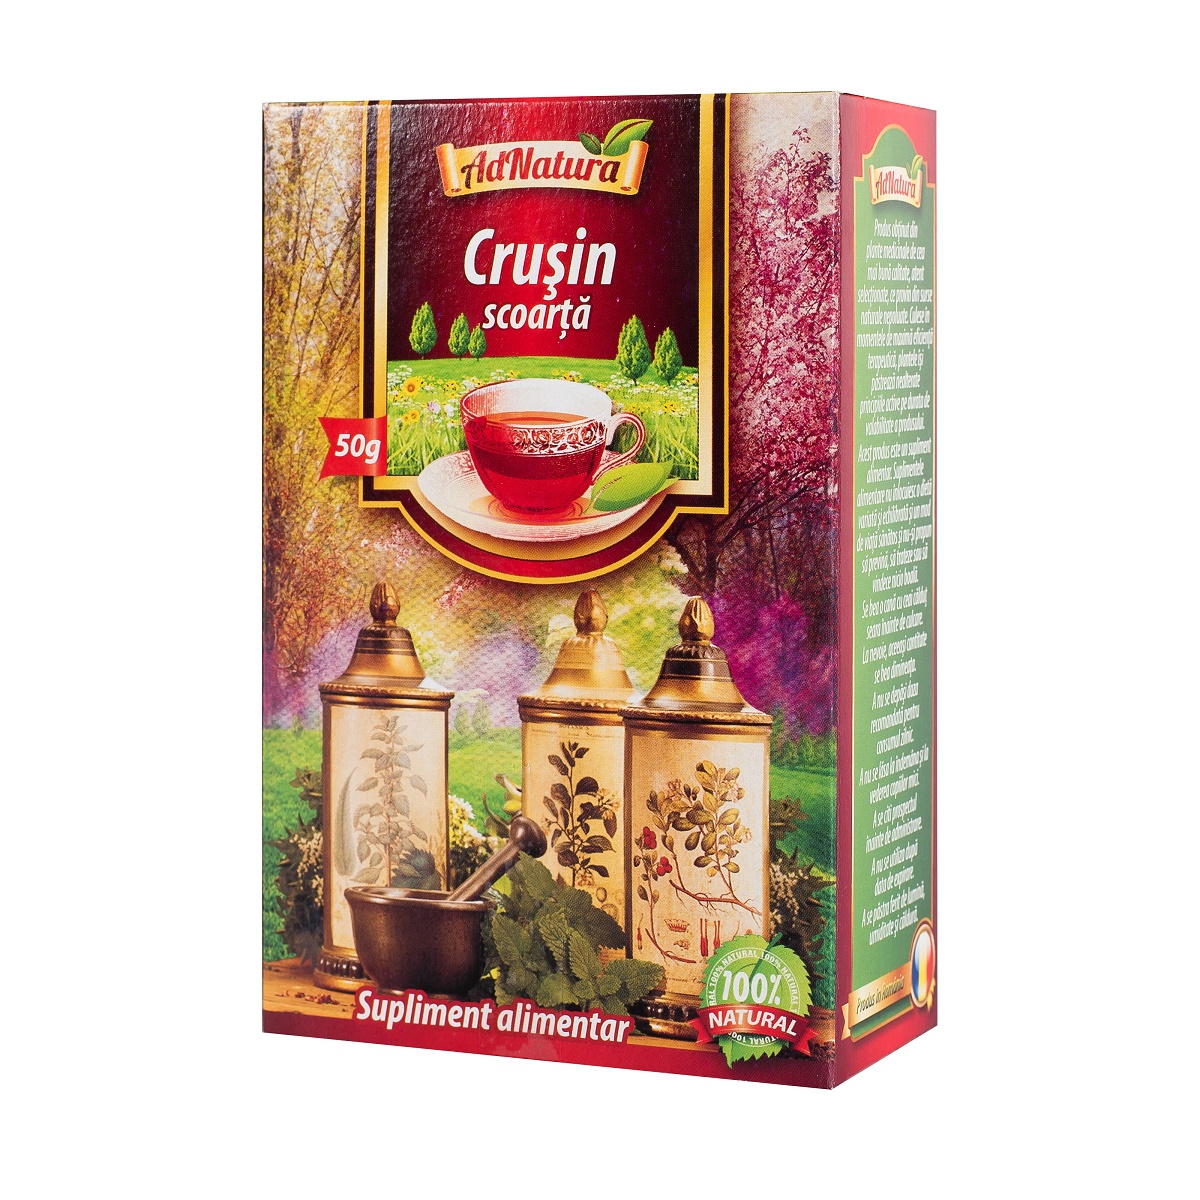 Ceai de Crusin scoarta, 50 g, AdNatura